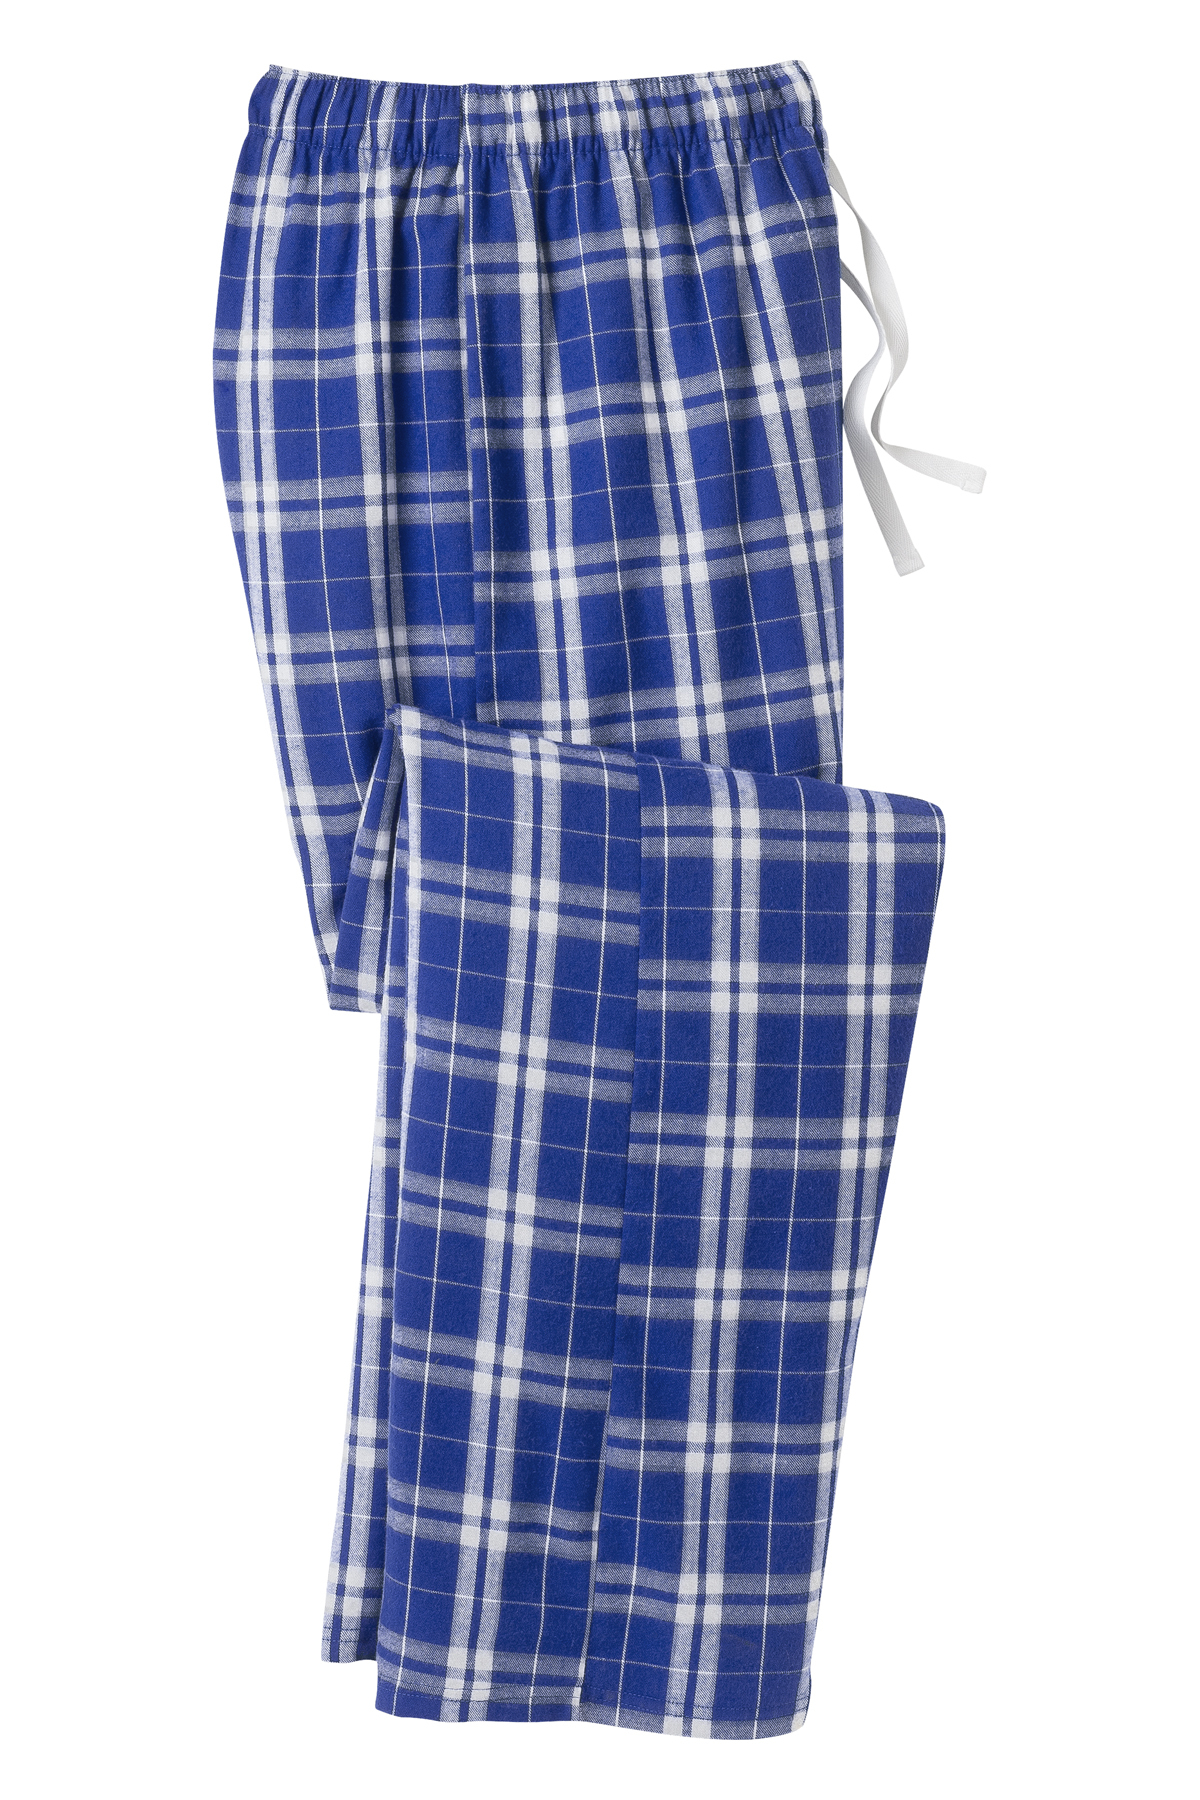 Unisex Flannel ROYAL & NAVY Blue Plaid Pants w/ PEC Oval – Prince